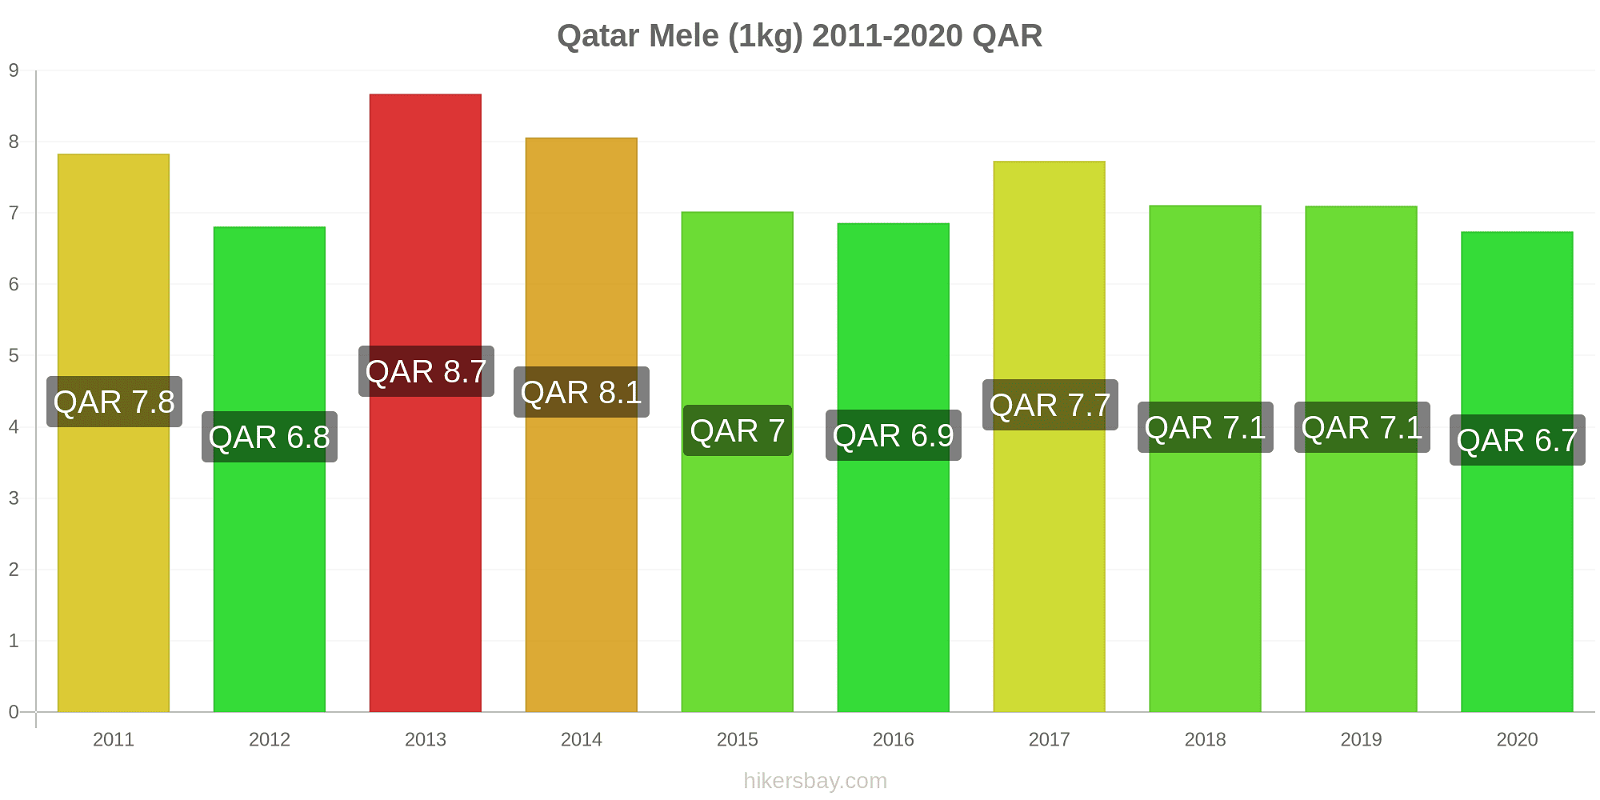 Qatar variazioni di prezzo Mele (1kg) hikersbay.com